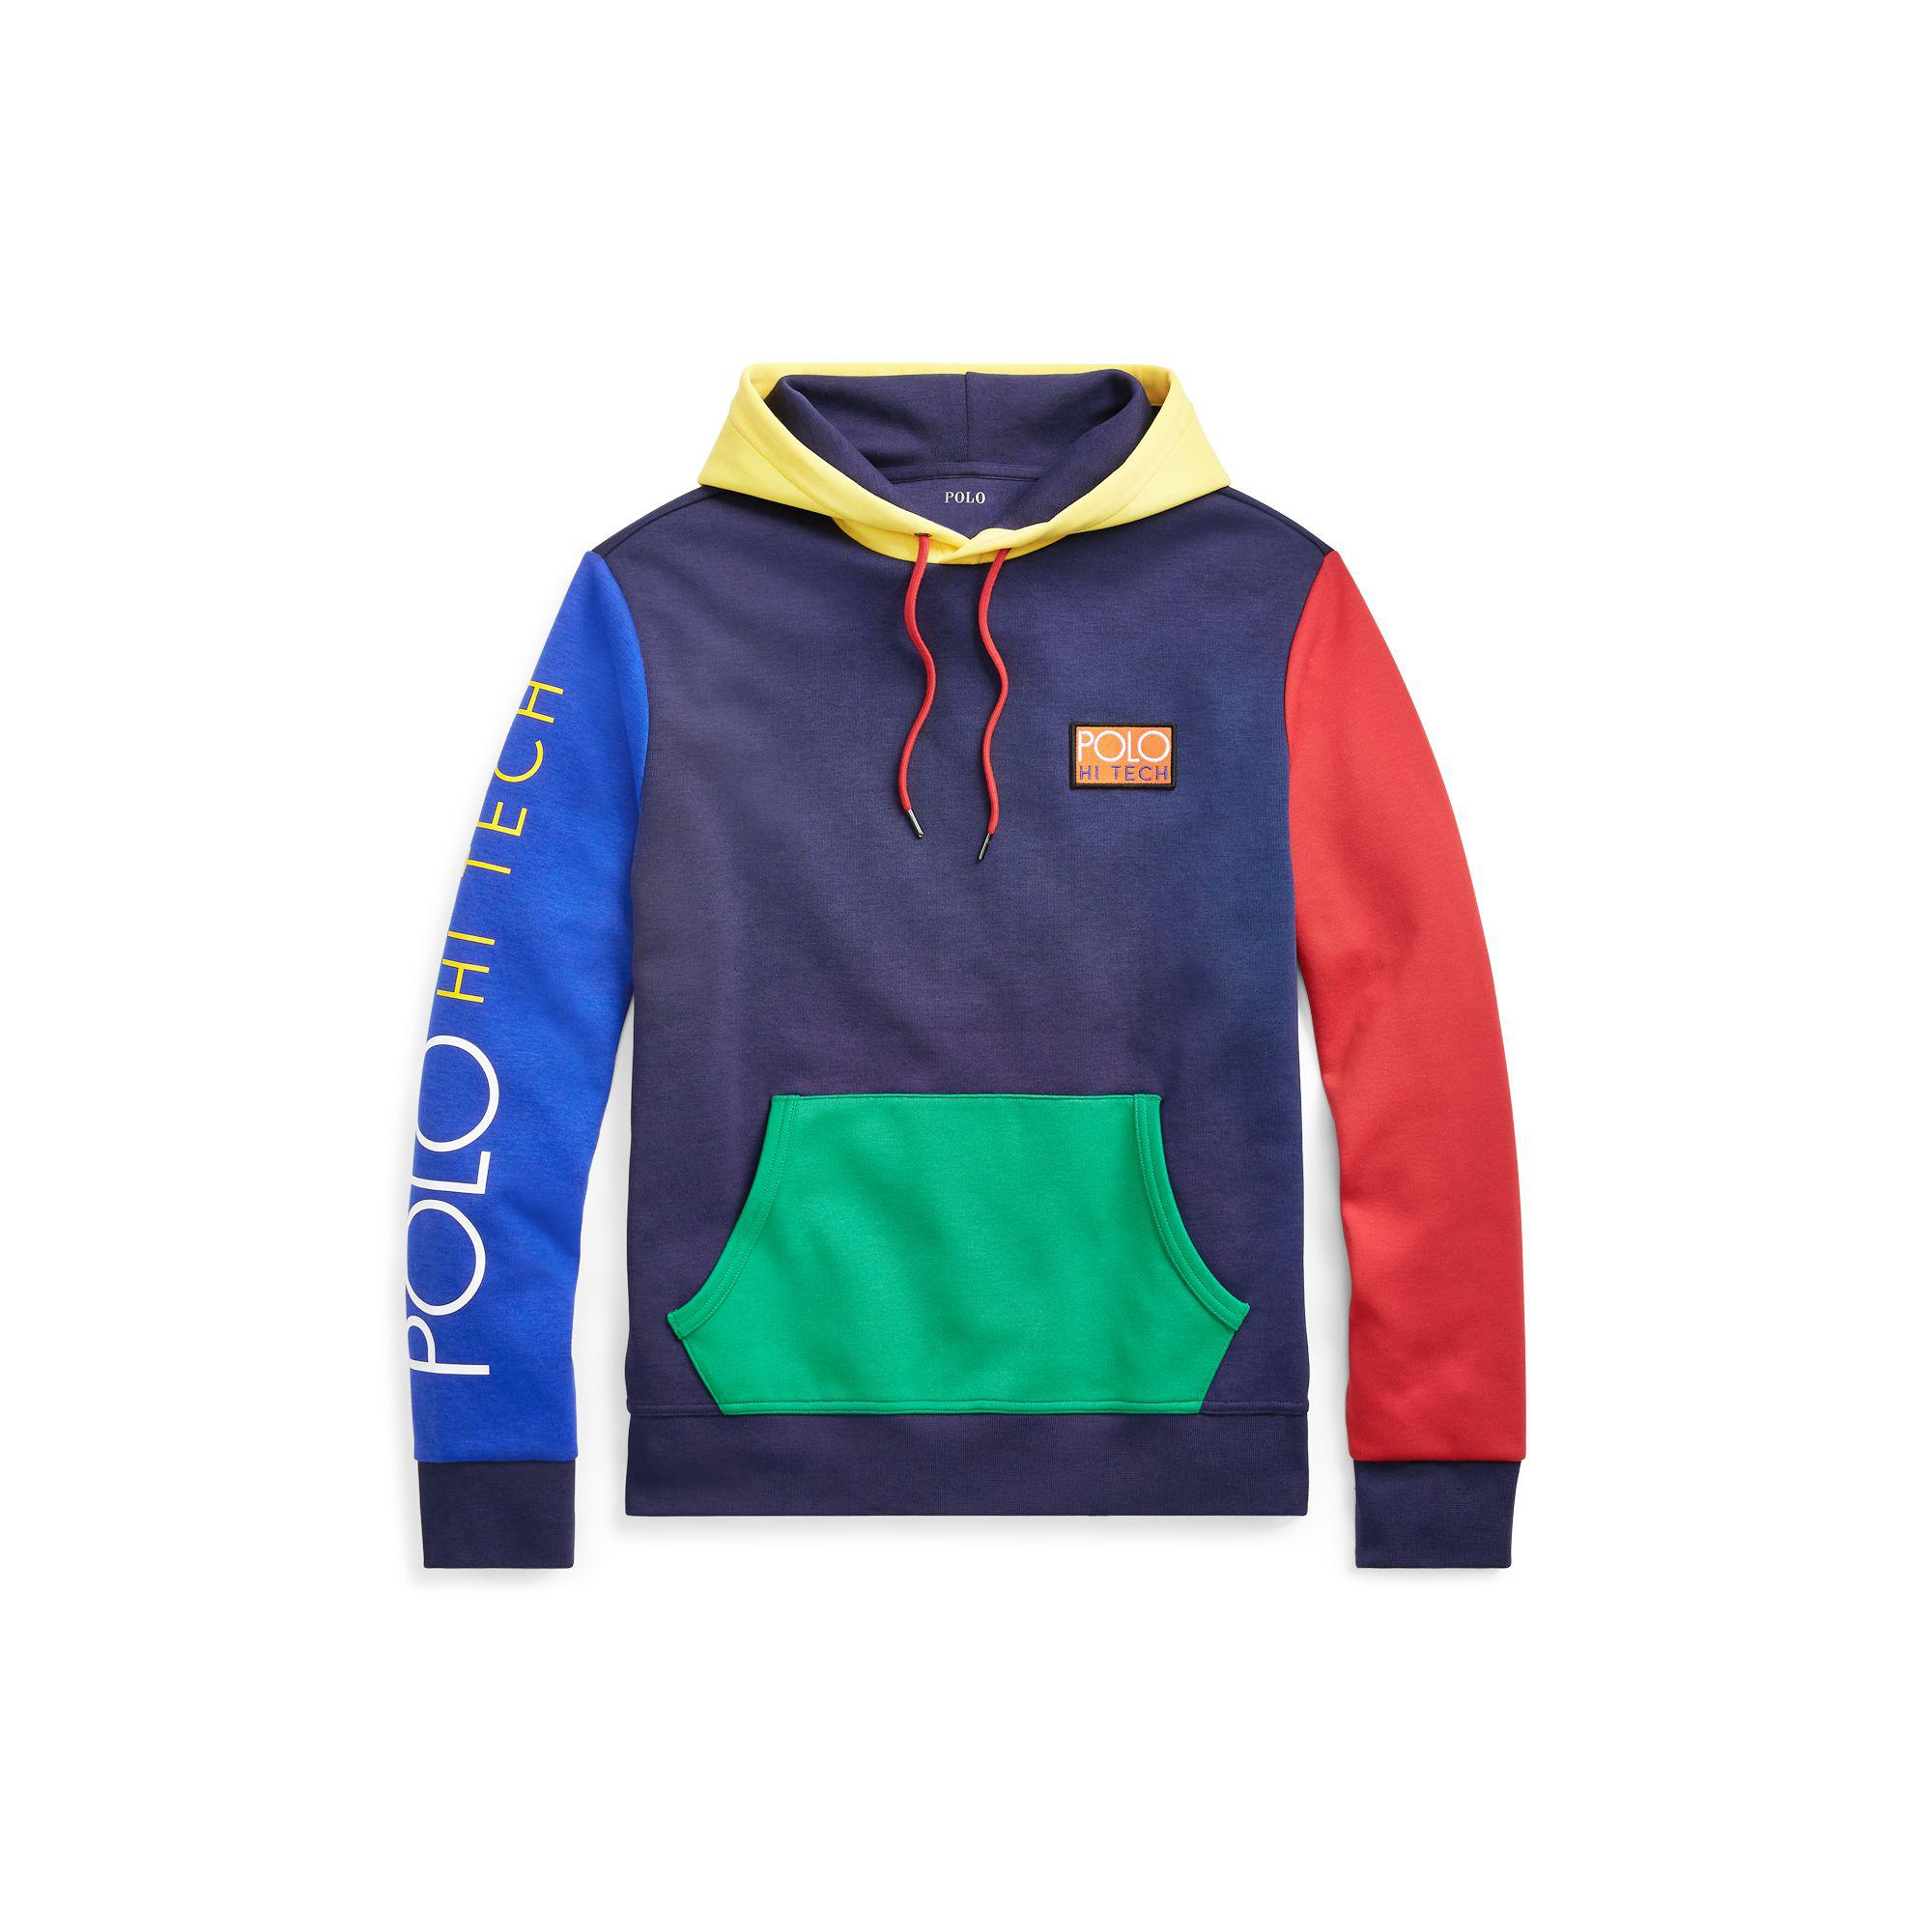 polo hi tech color block hoodie